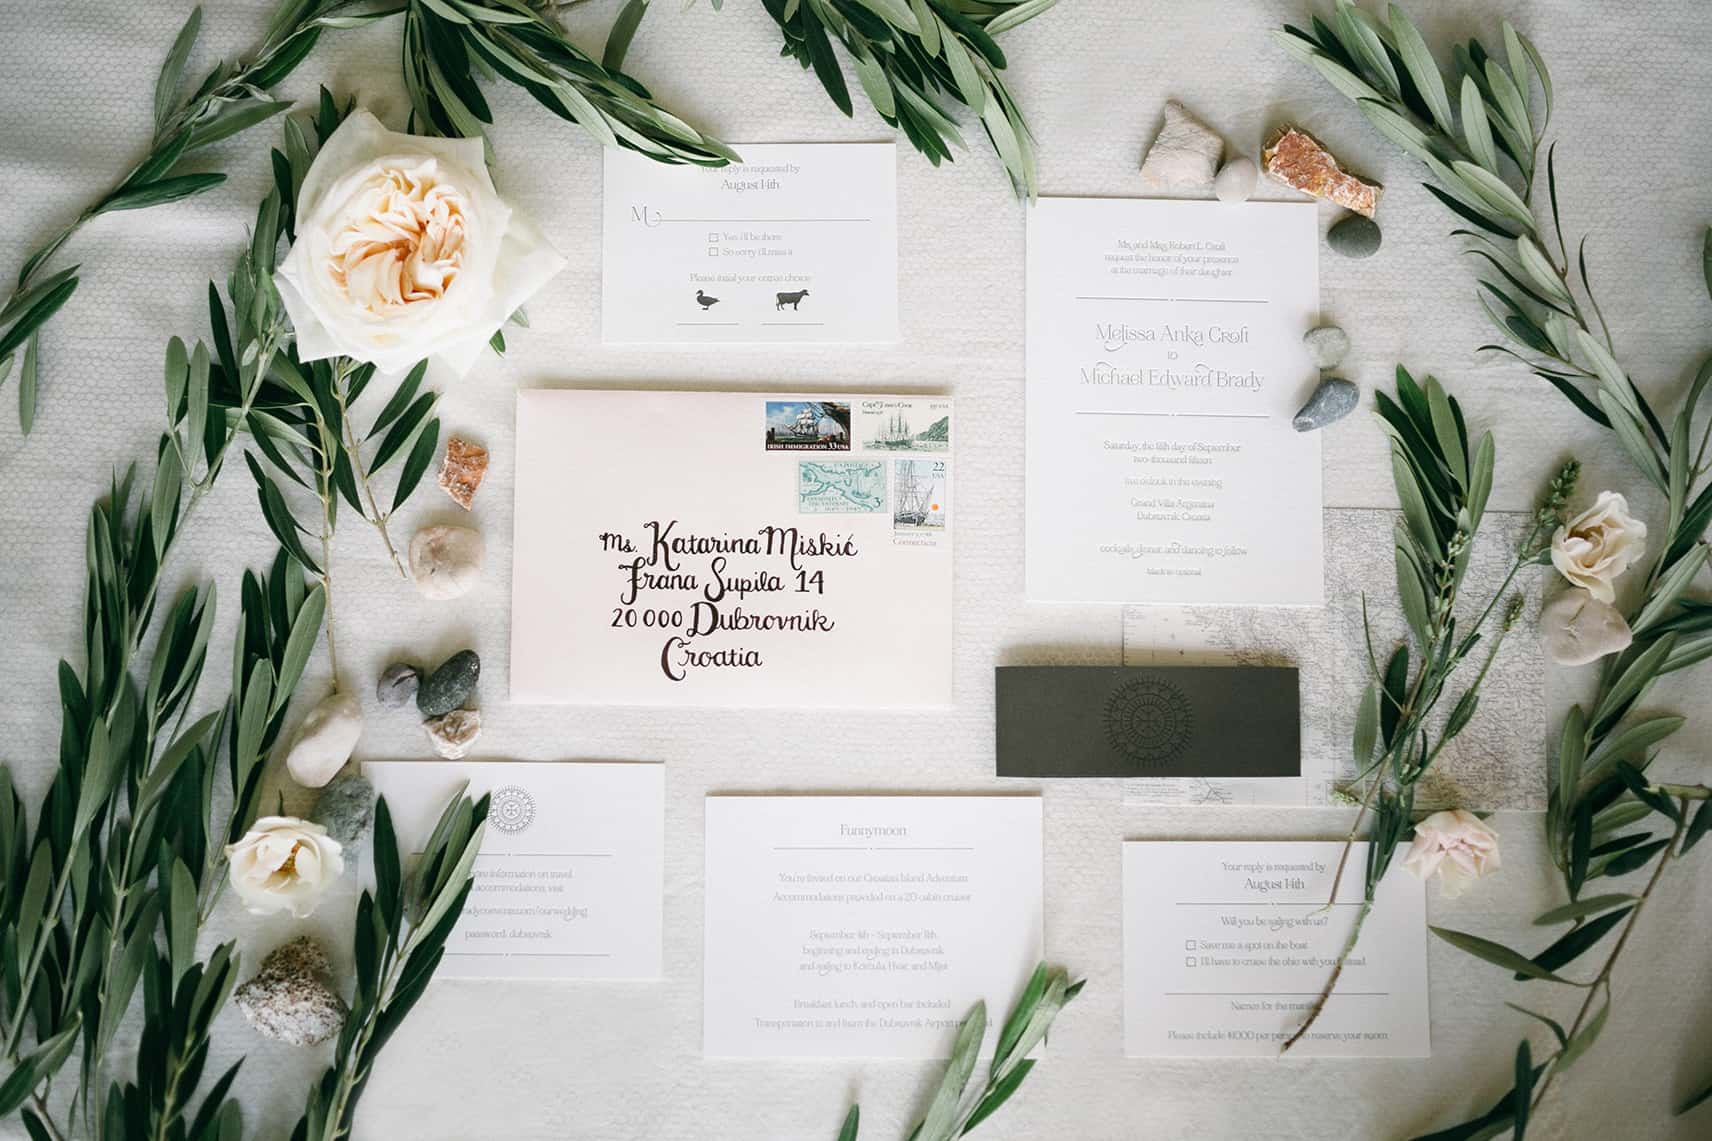 Grand Villa Argentina Dubrovnik, Croatia Letterpress Wedding Invitation